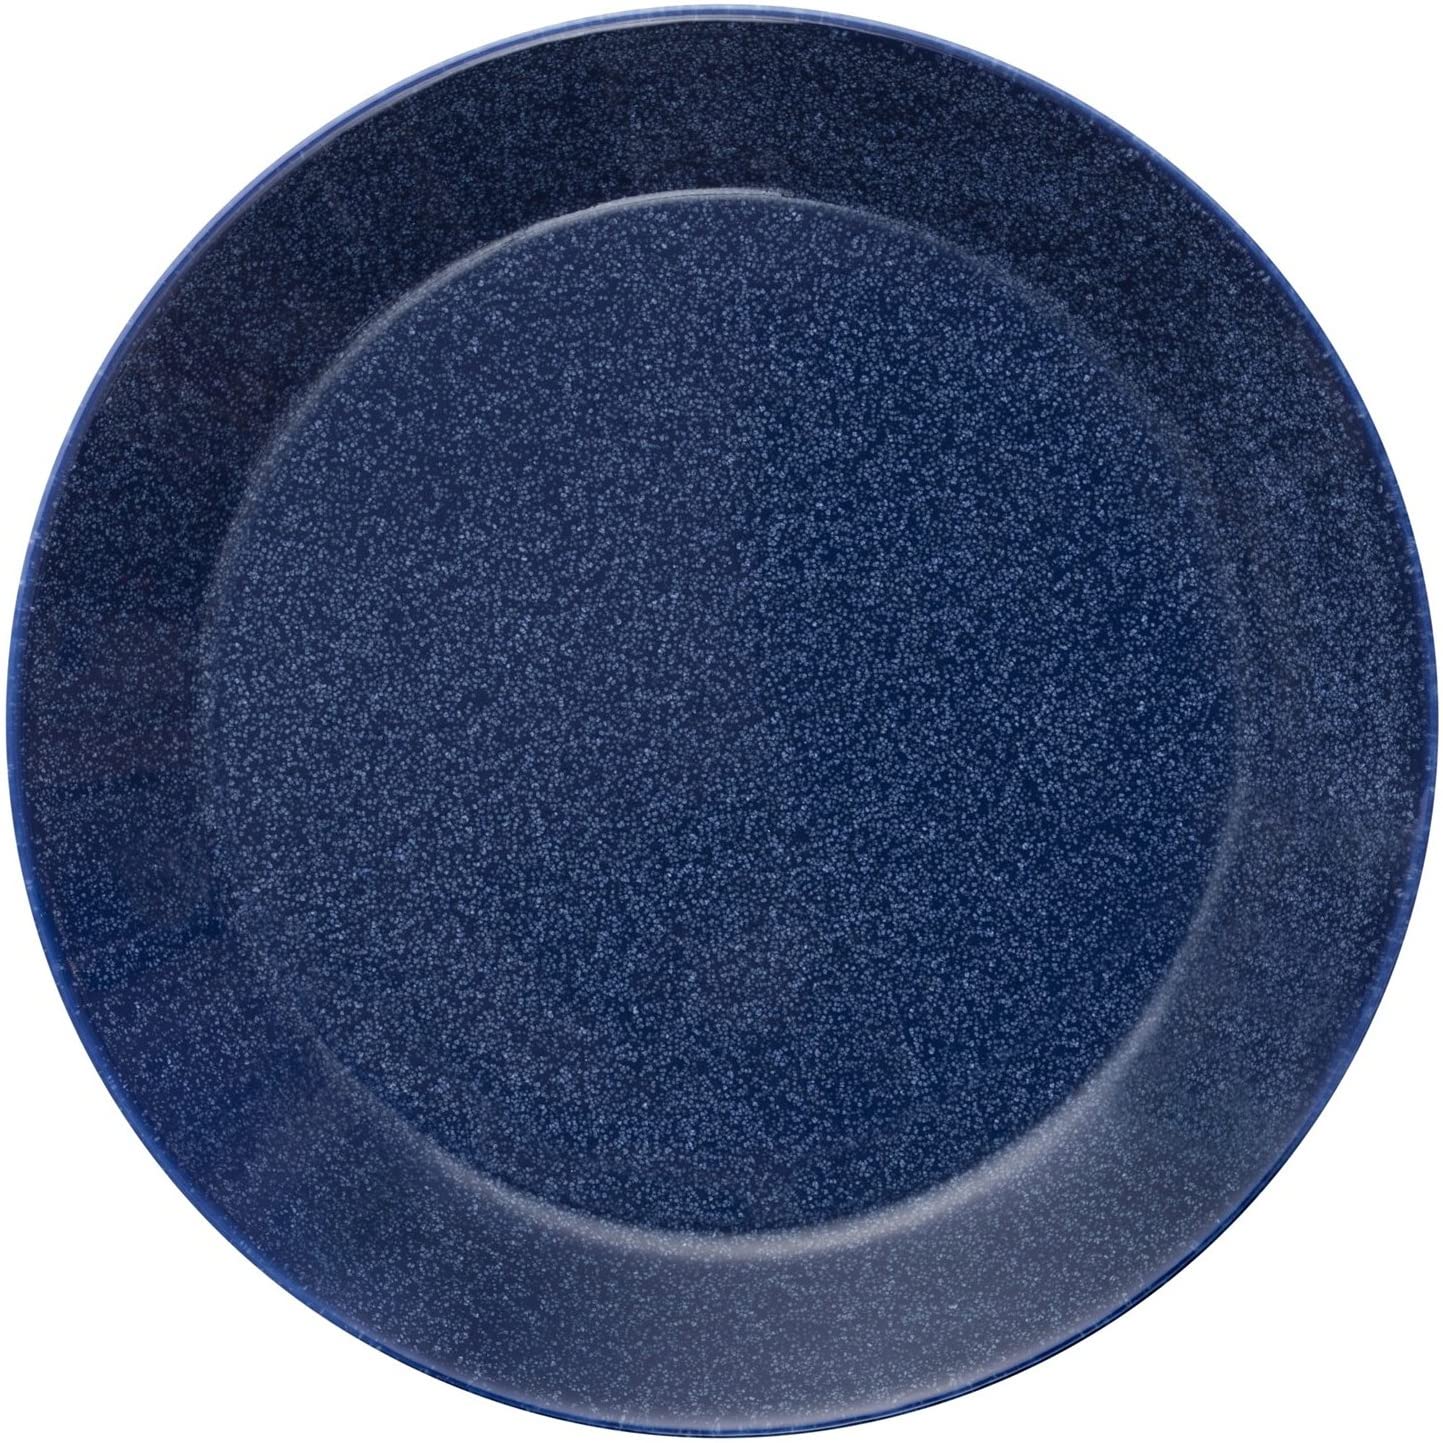 Iittala Teema Plate Duo Blue Speckled Blue Diameter 21 cm